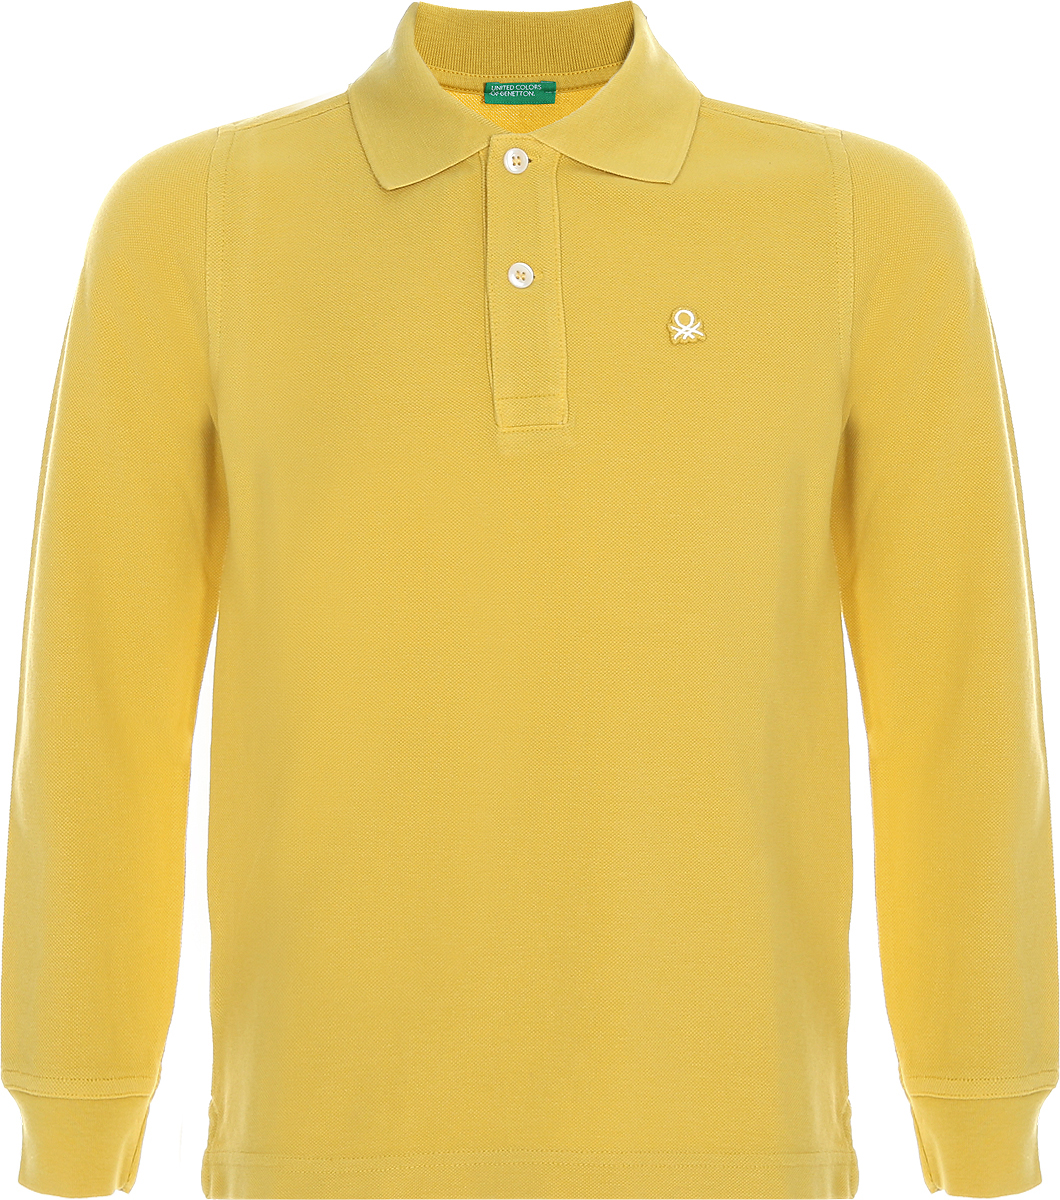 Кофта для мальчика United Colors of Benetton, цвет: желтый. 3089C3090_36H. Размер 150